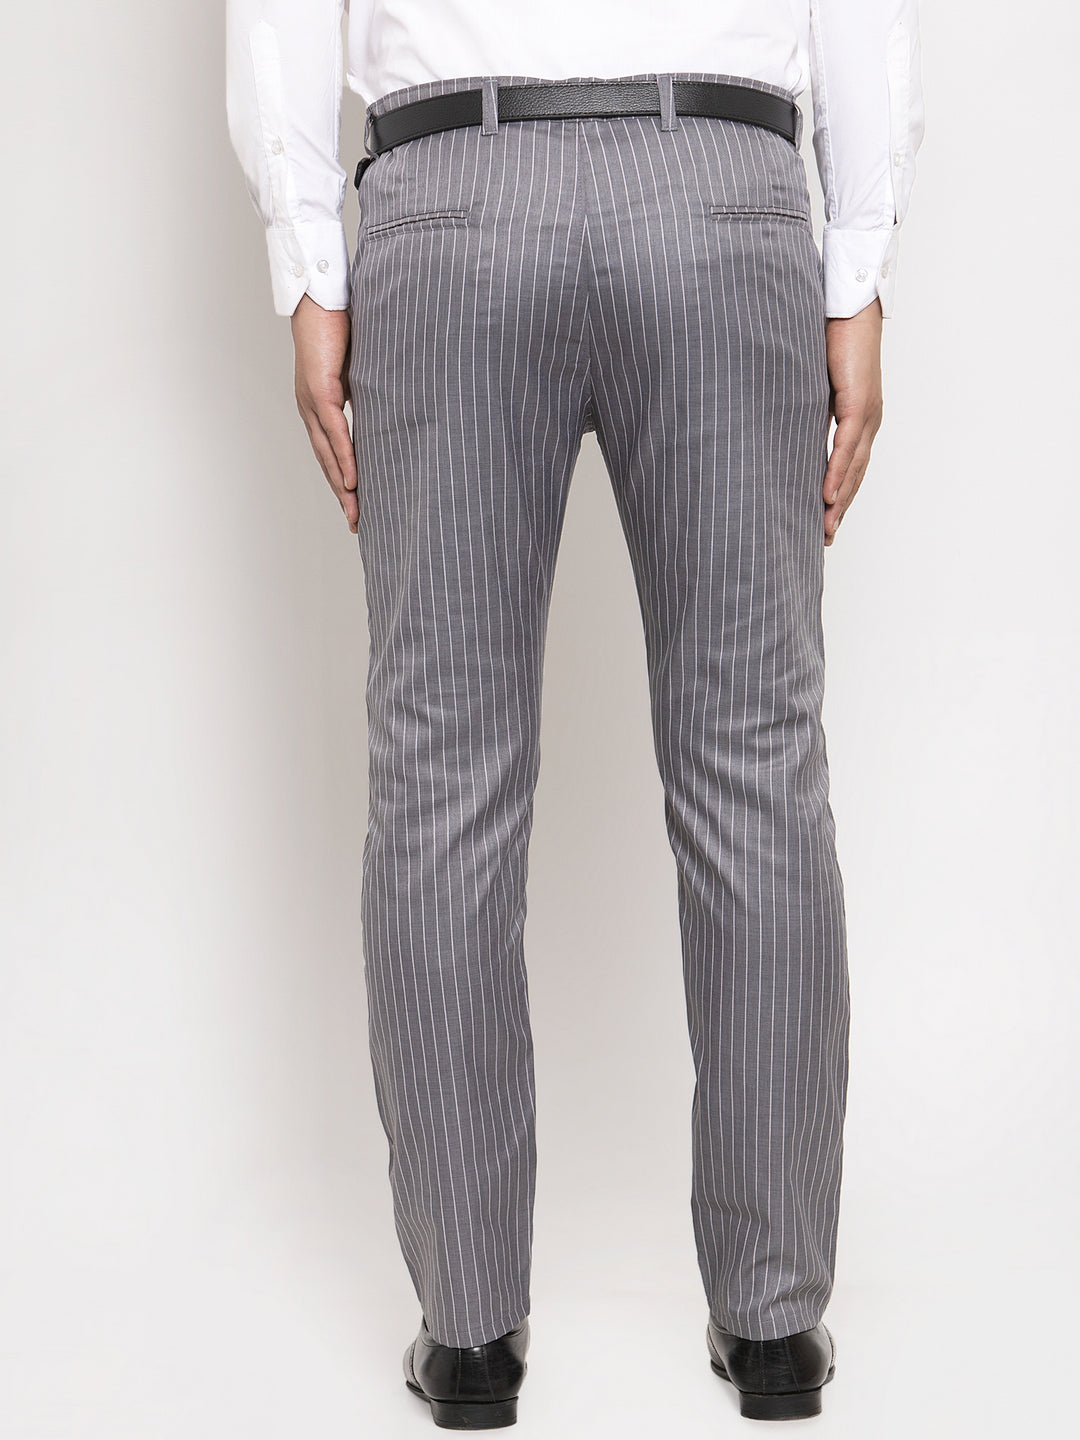 Jainish Men's Grey Cotton Striped Formal Trousers